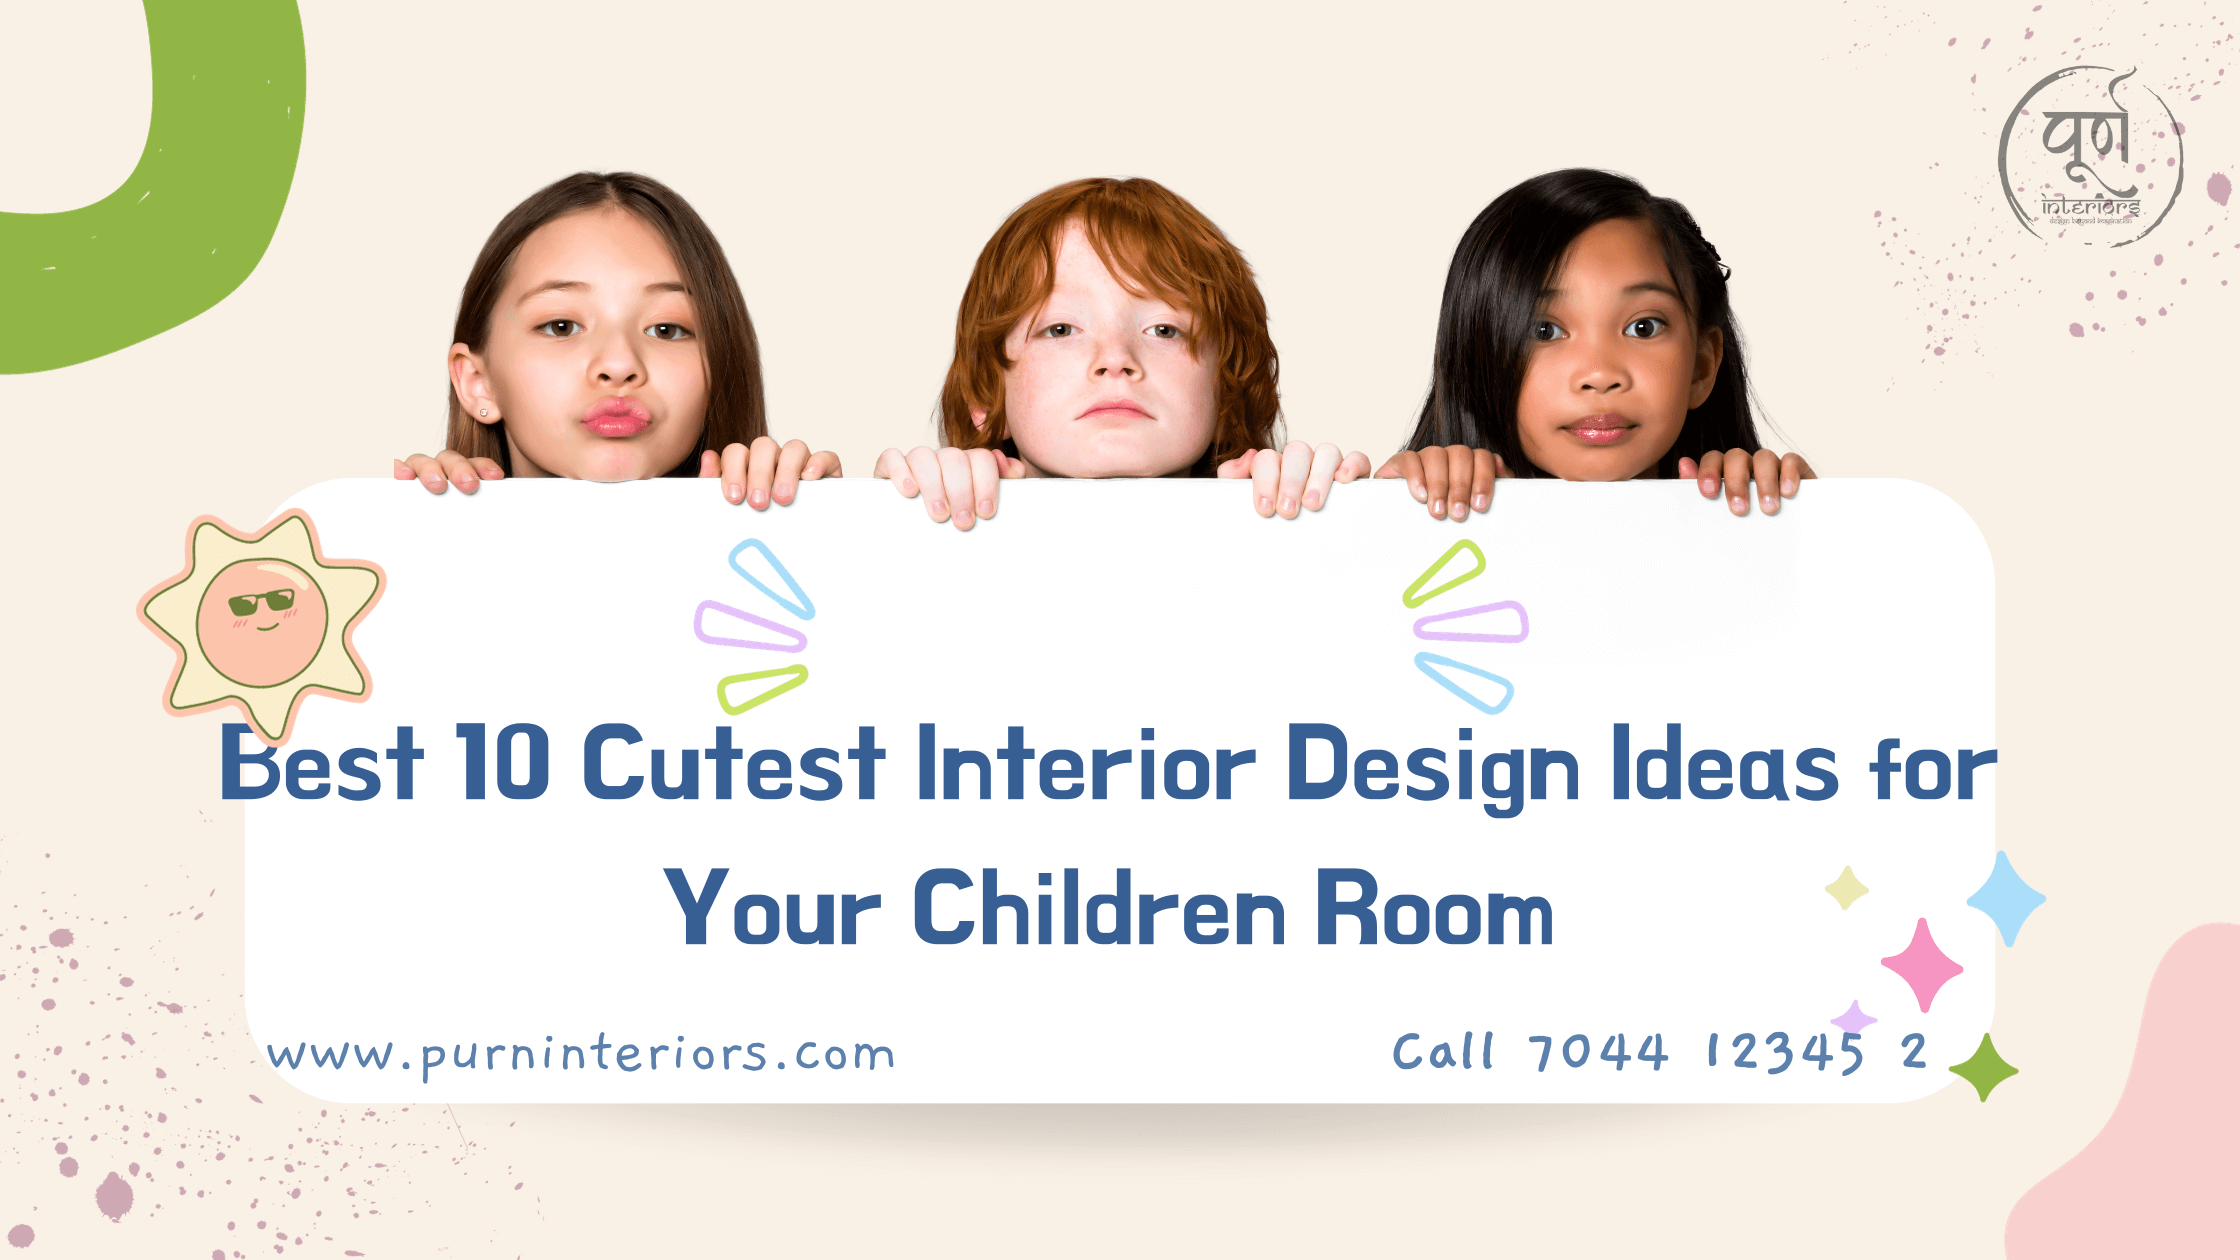 Best 10 Cutest Interior Design Ideas for Your Children Room